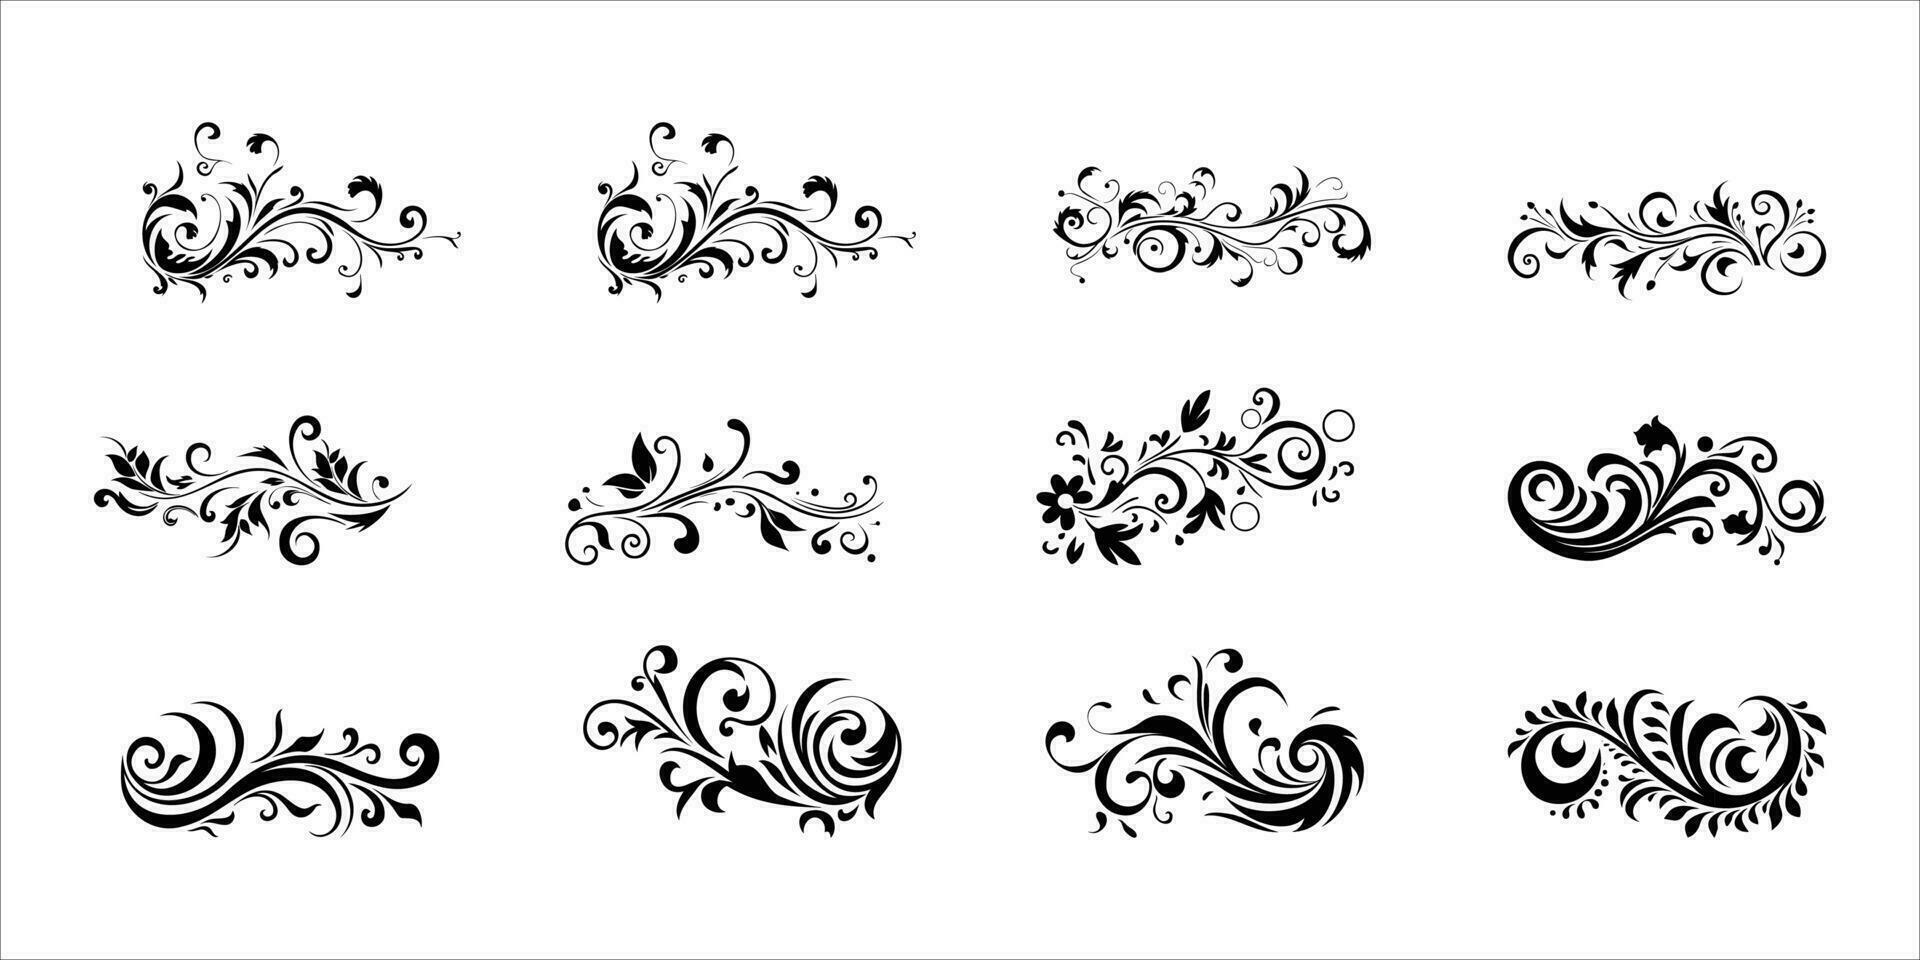 Ornate Script  Floral Calligraphic Set, Decorative and Elegantly Lettered vector